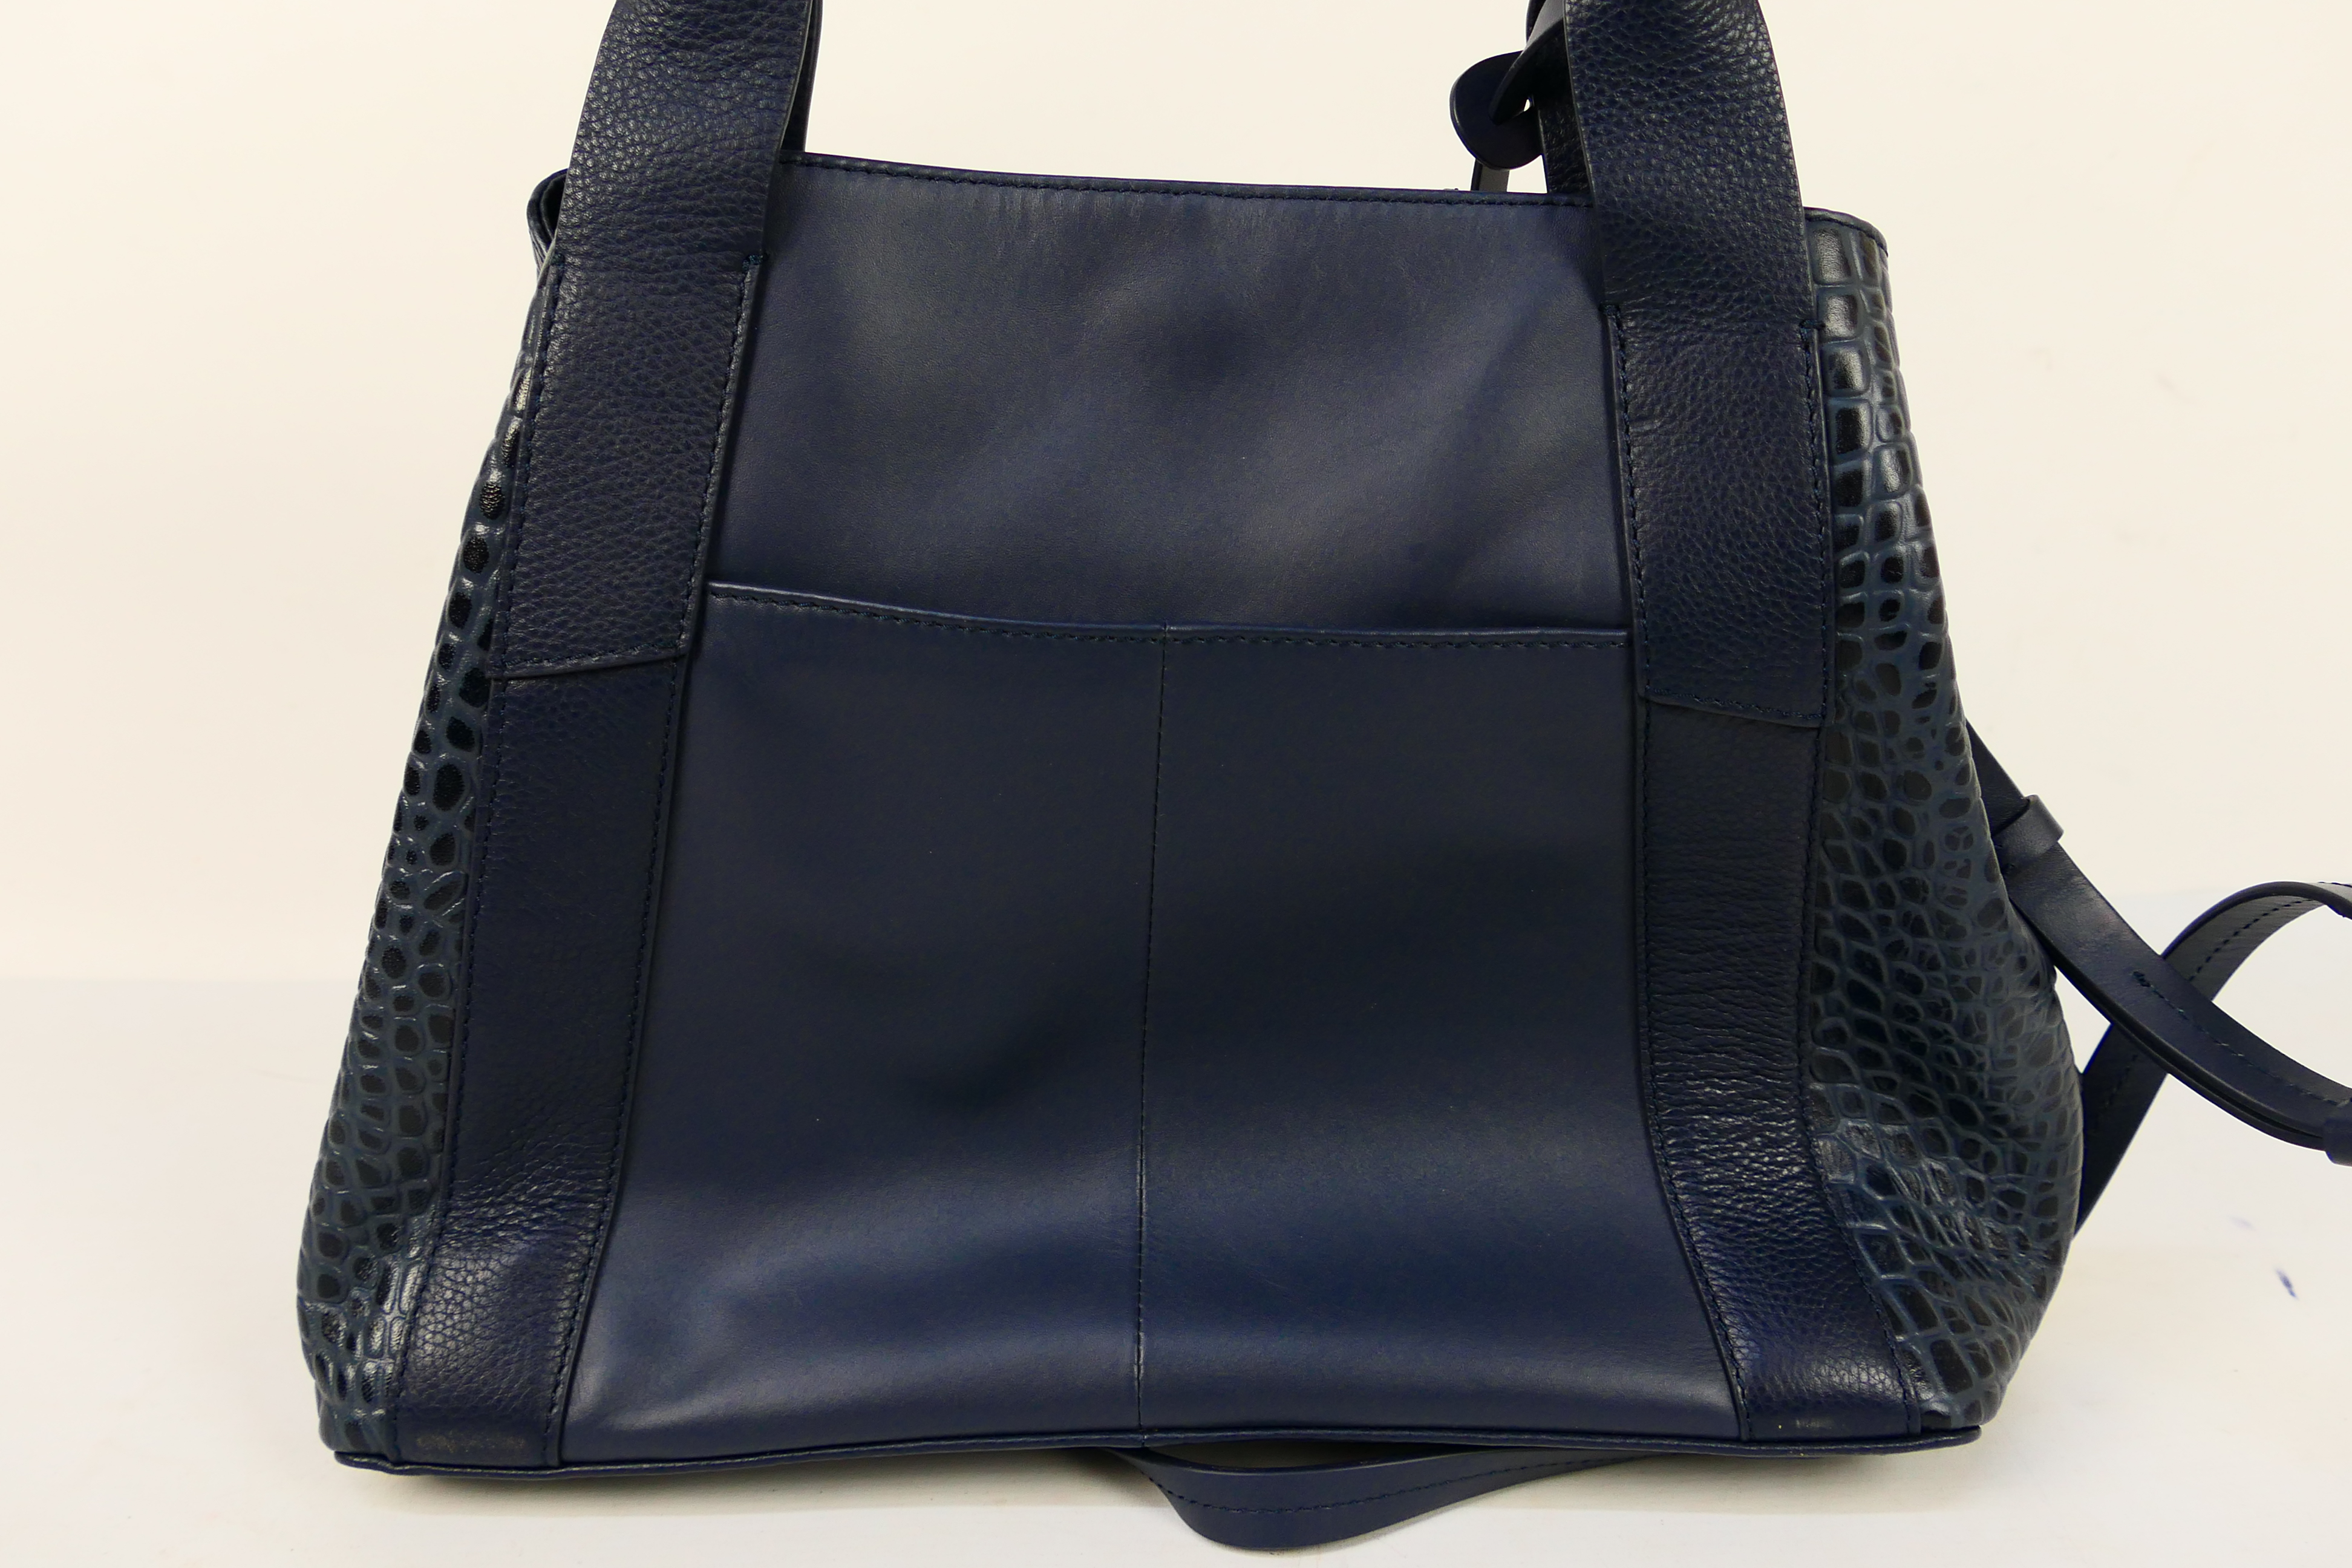 Radley - A dark blue Radley London leather handbag - Handbag has two interior zip pockets, - Image 6 of 8